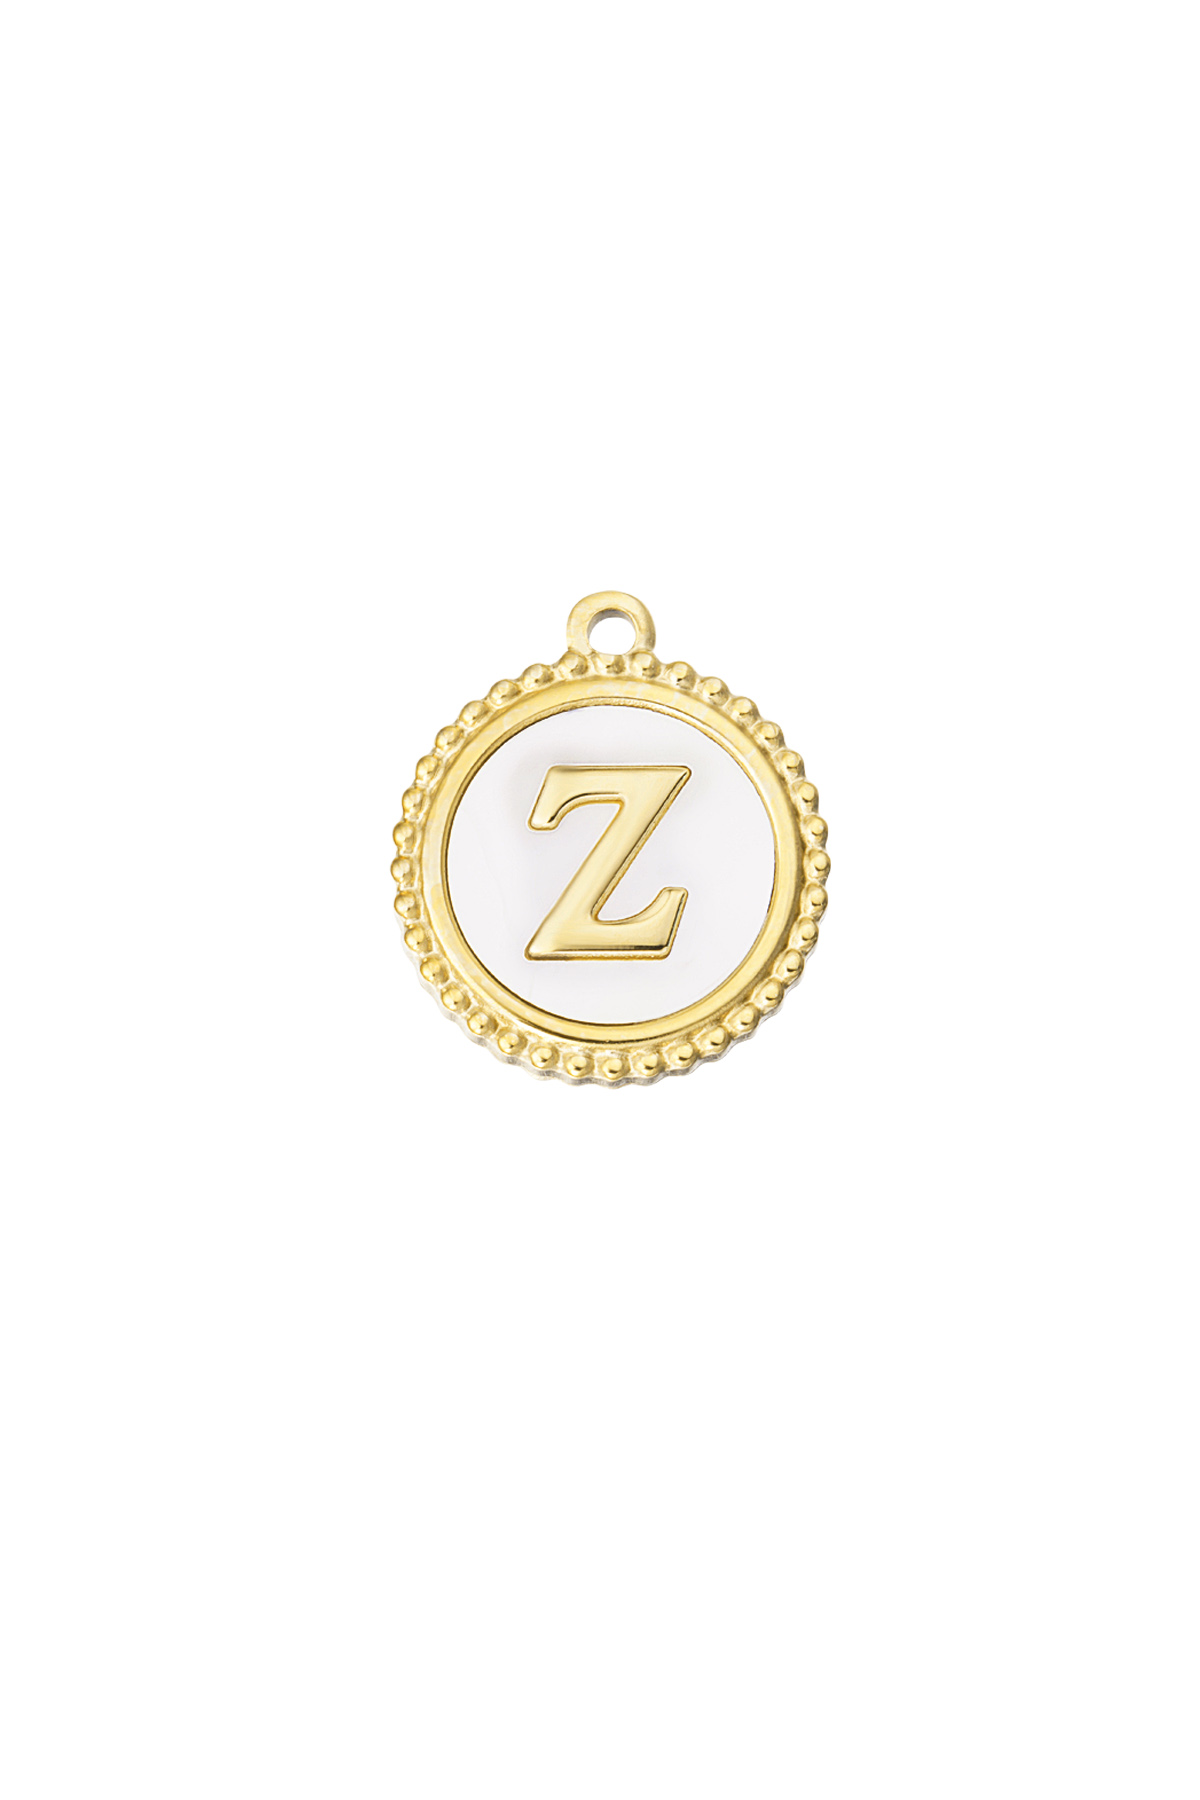 Oro / Charm agraciado Z - oro/blanco Imagen24